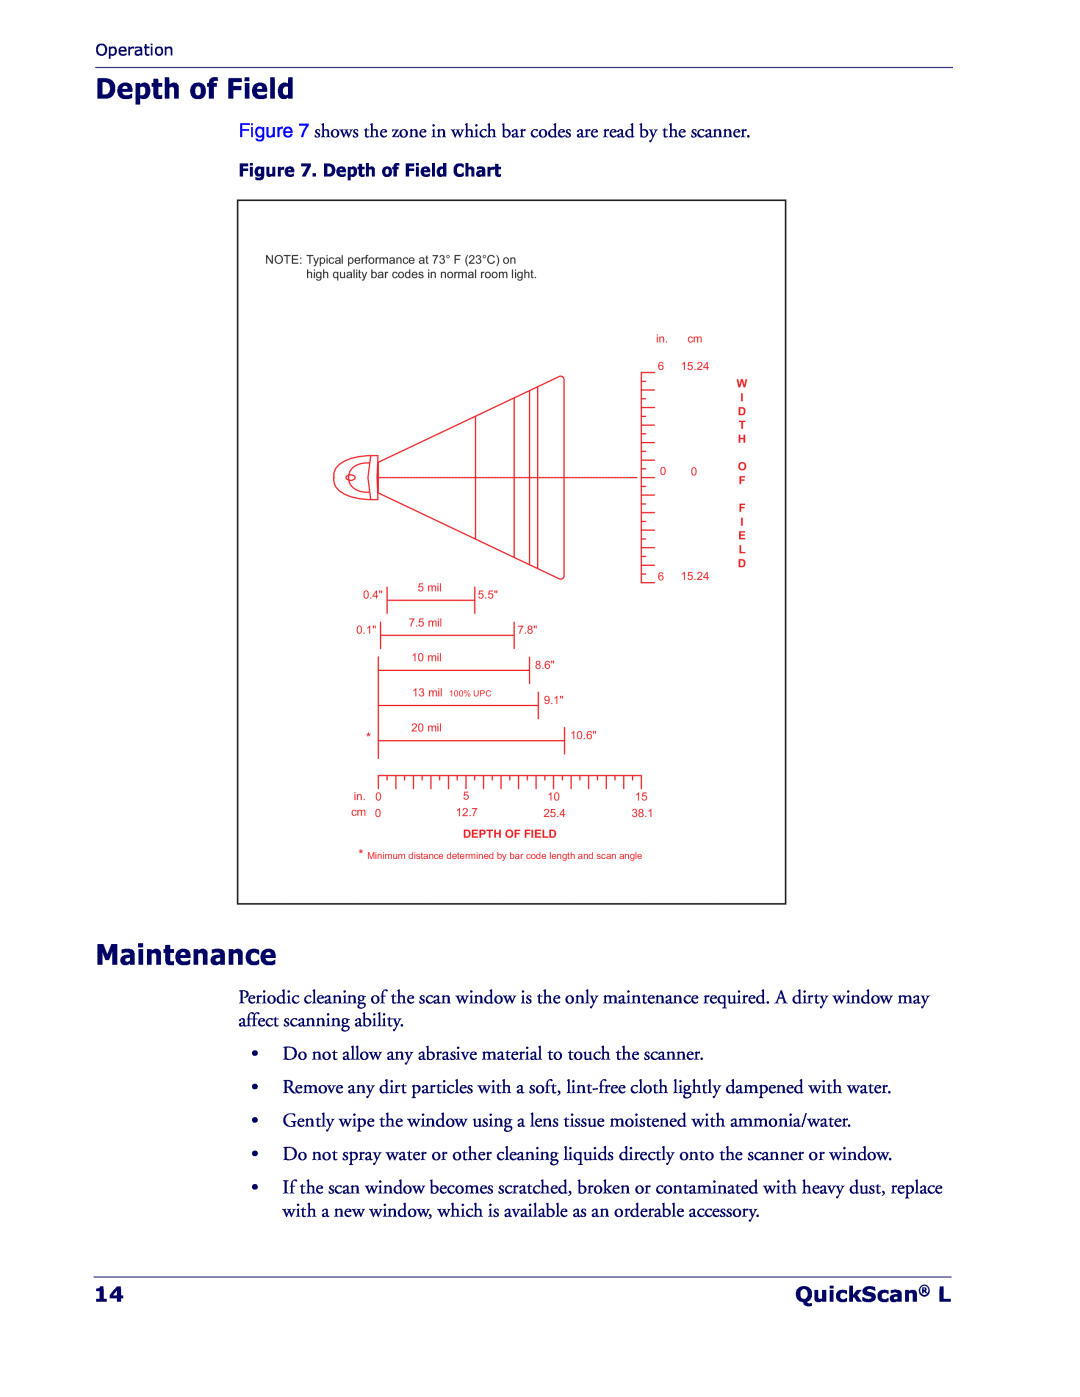 Datalogic Scanning QD 2300 manual Depth of Field, Maintenance, QuickScan L 